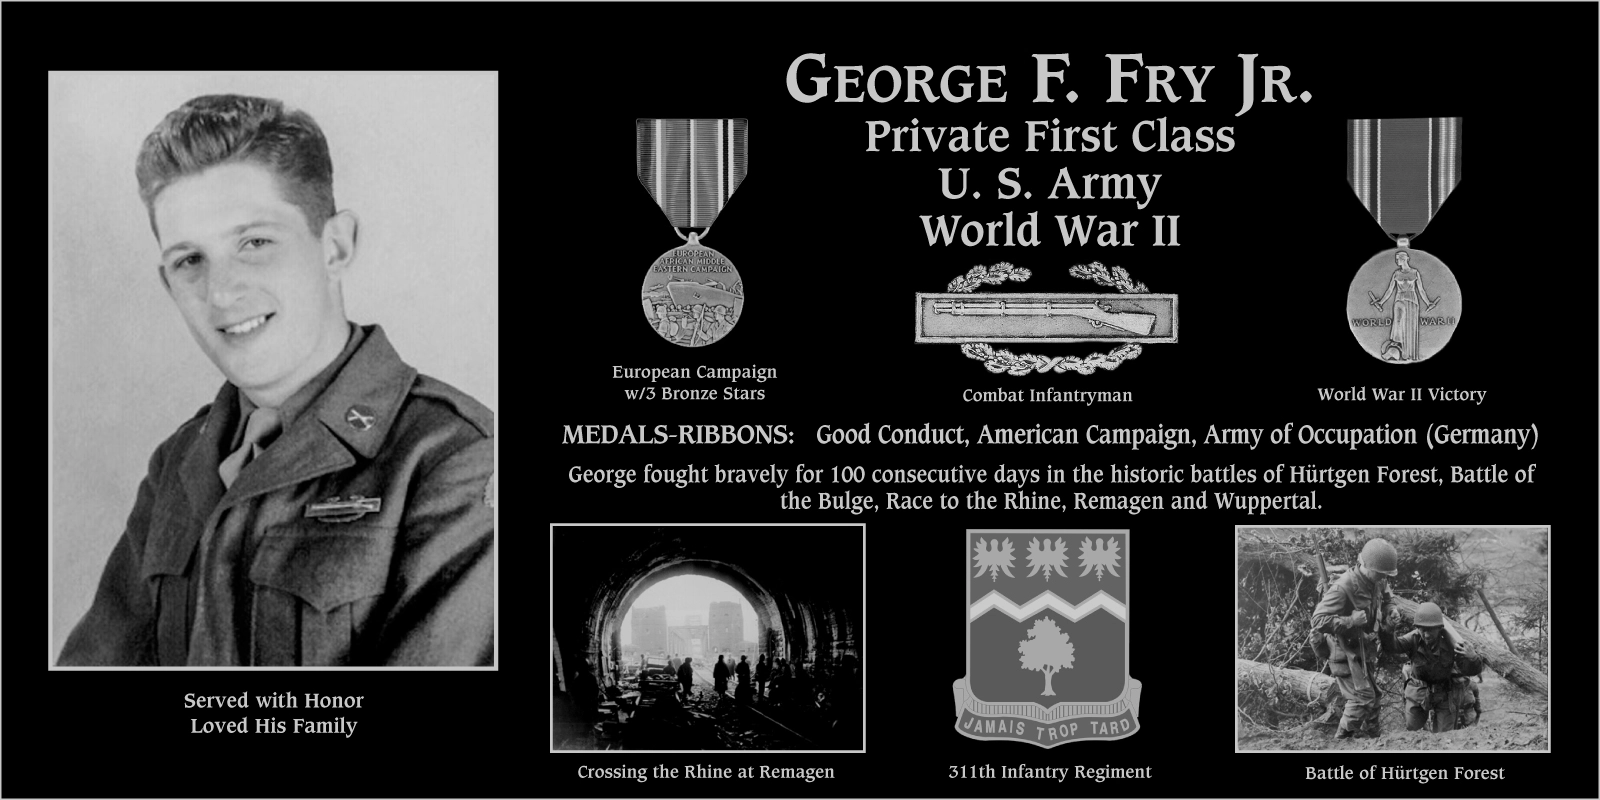 George F. Fry jr